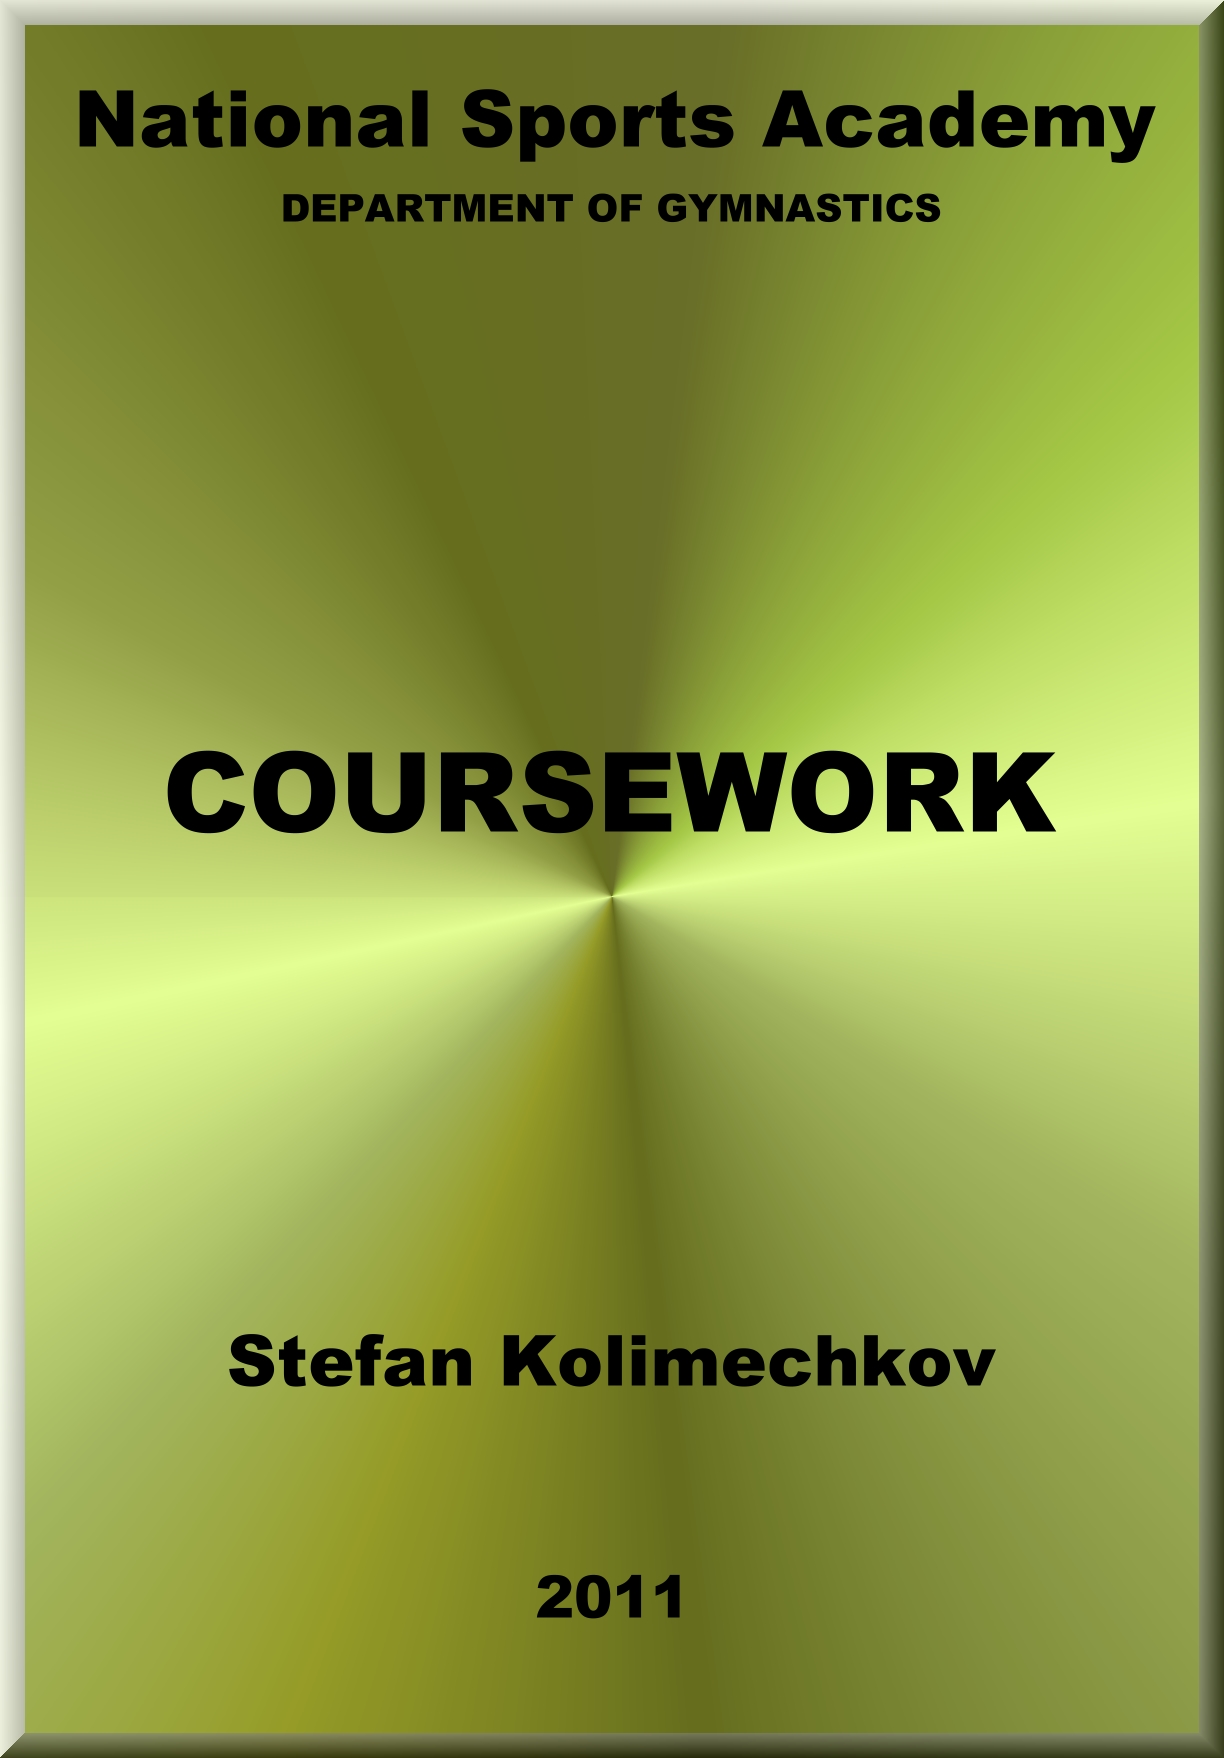 Coursework (2011)